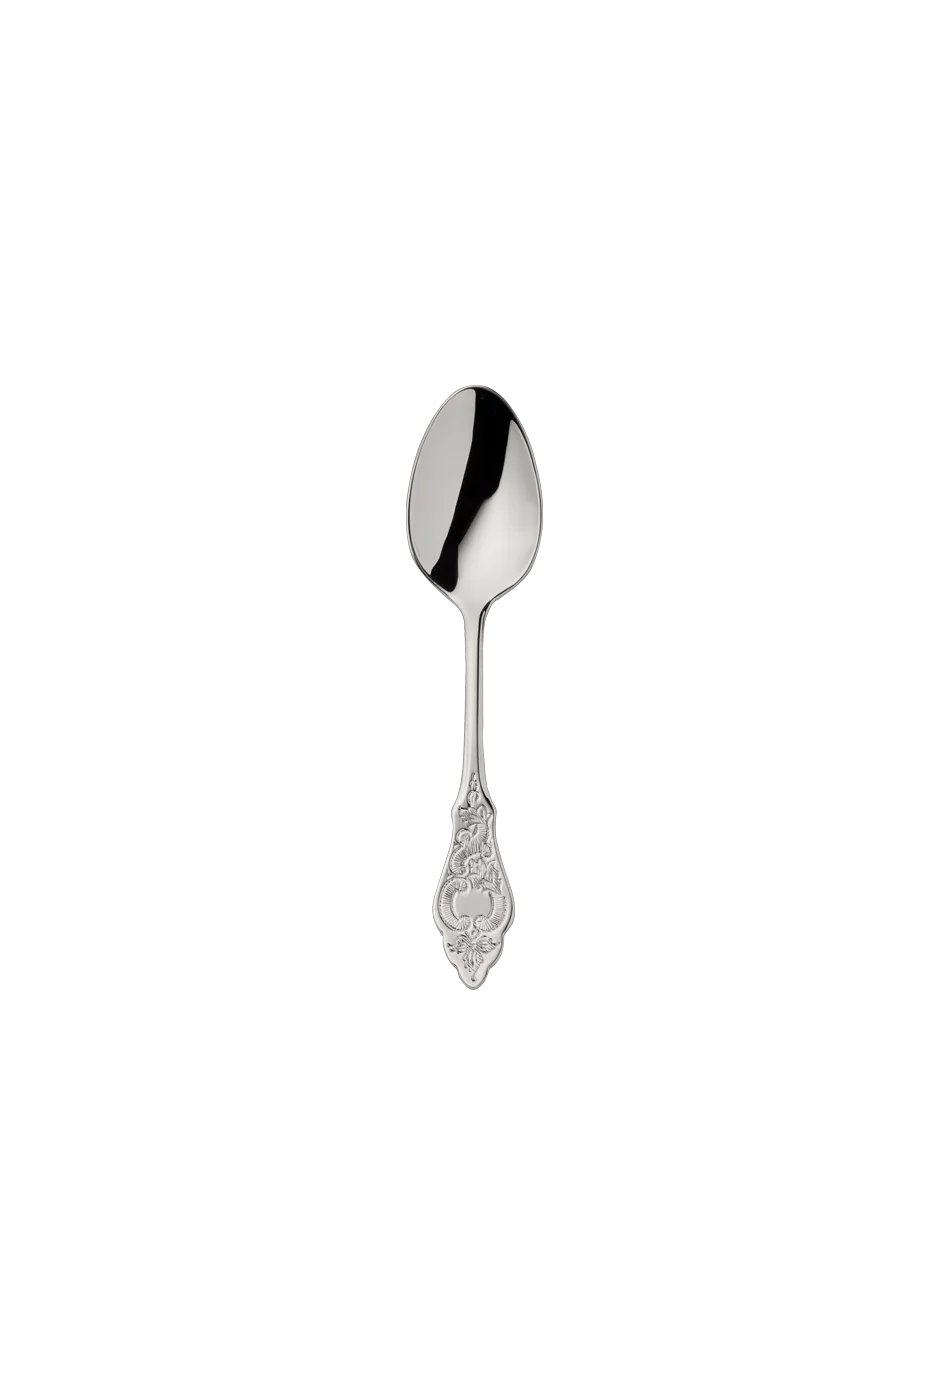 Ostfriesen Coffee Spoon 13,0 Cm (150g massive silverplated)